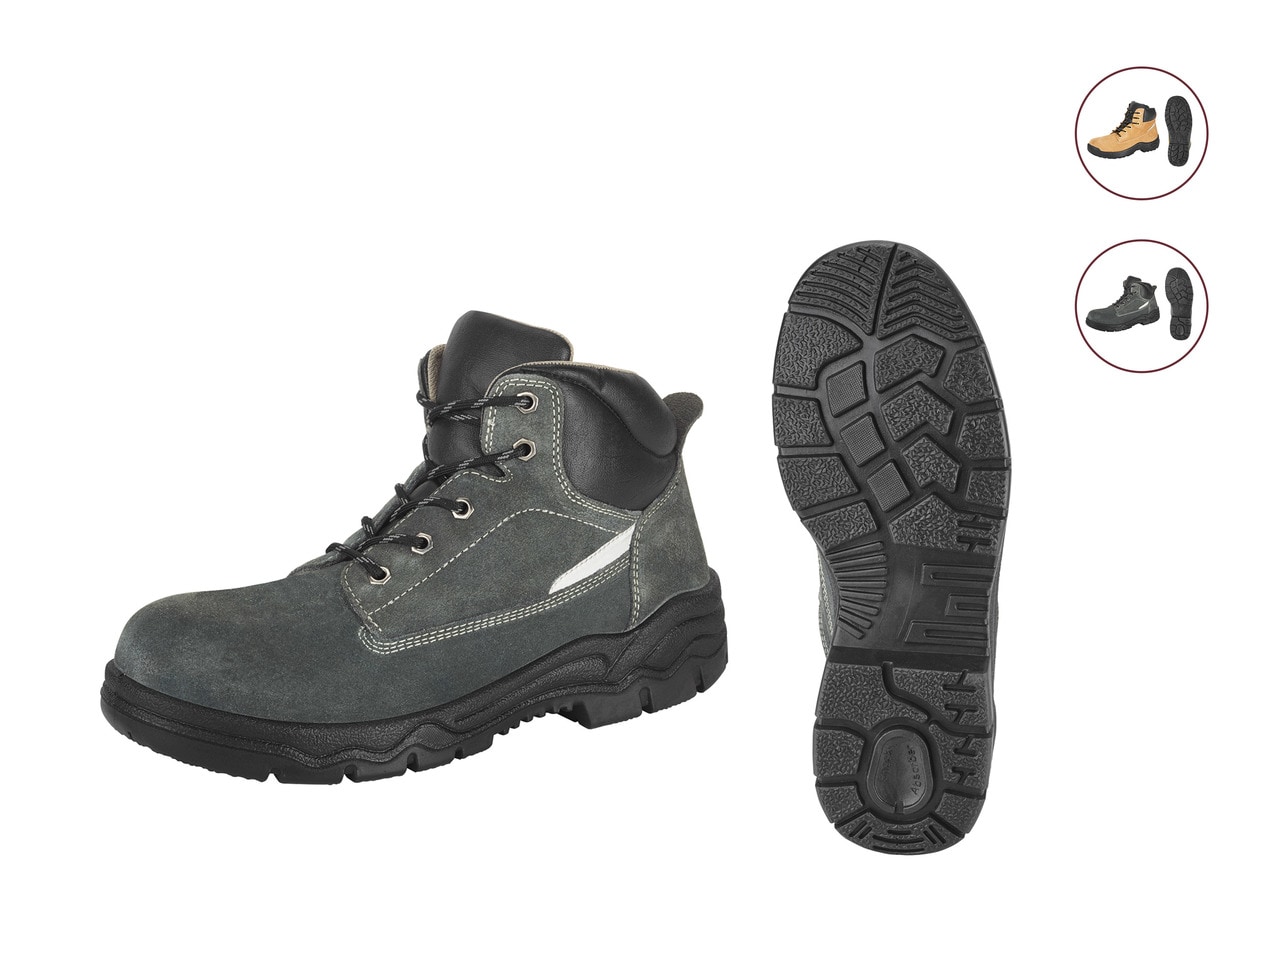 Powerfix Profi Men's Leather Safety Boots1